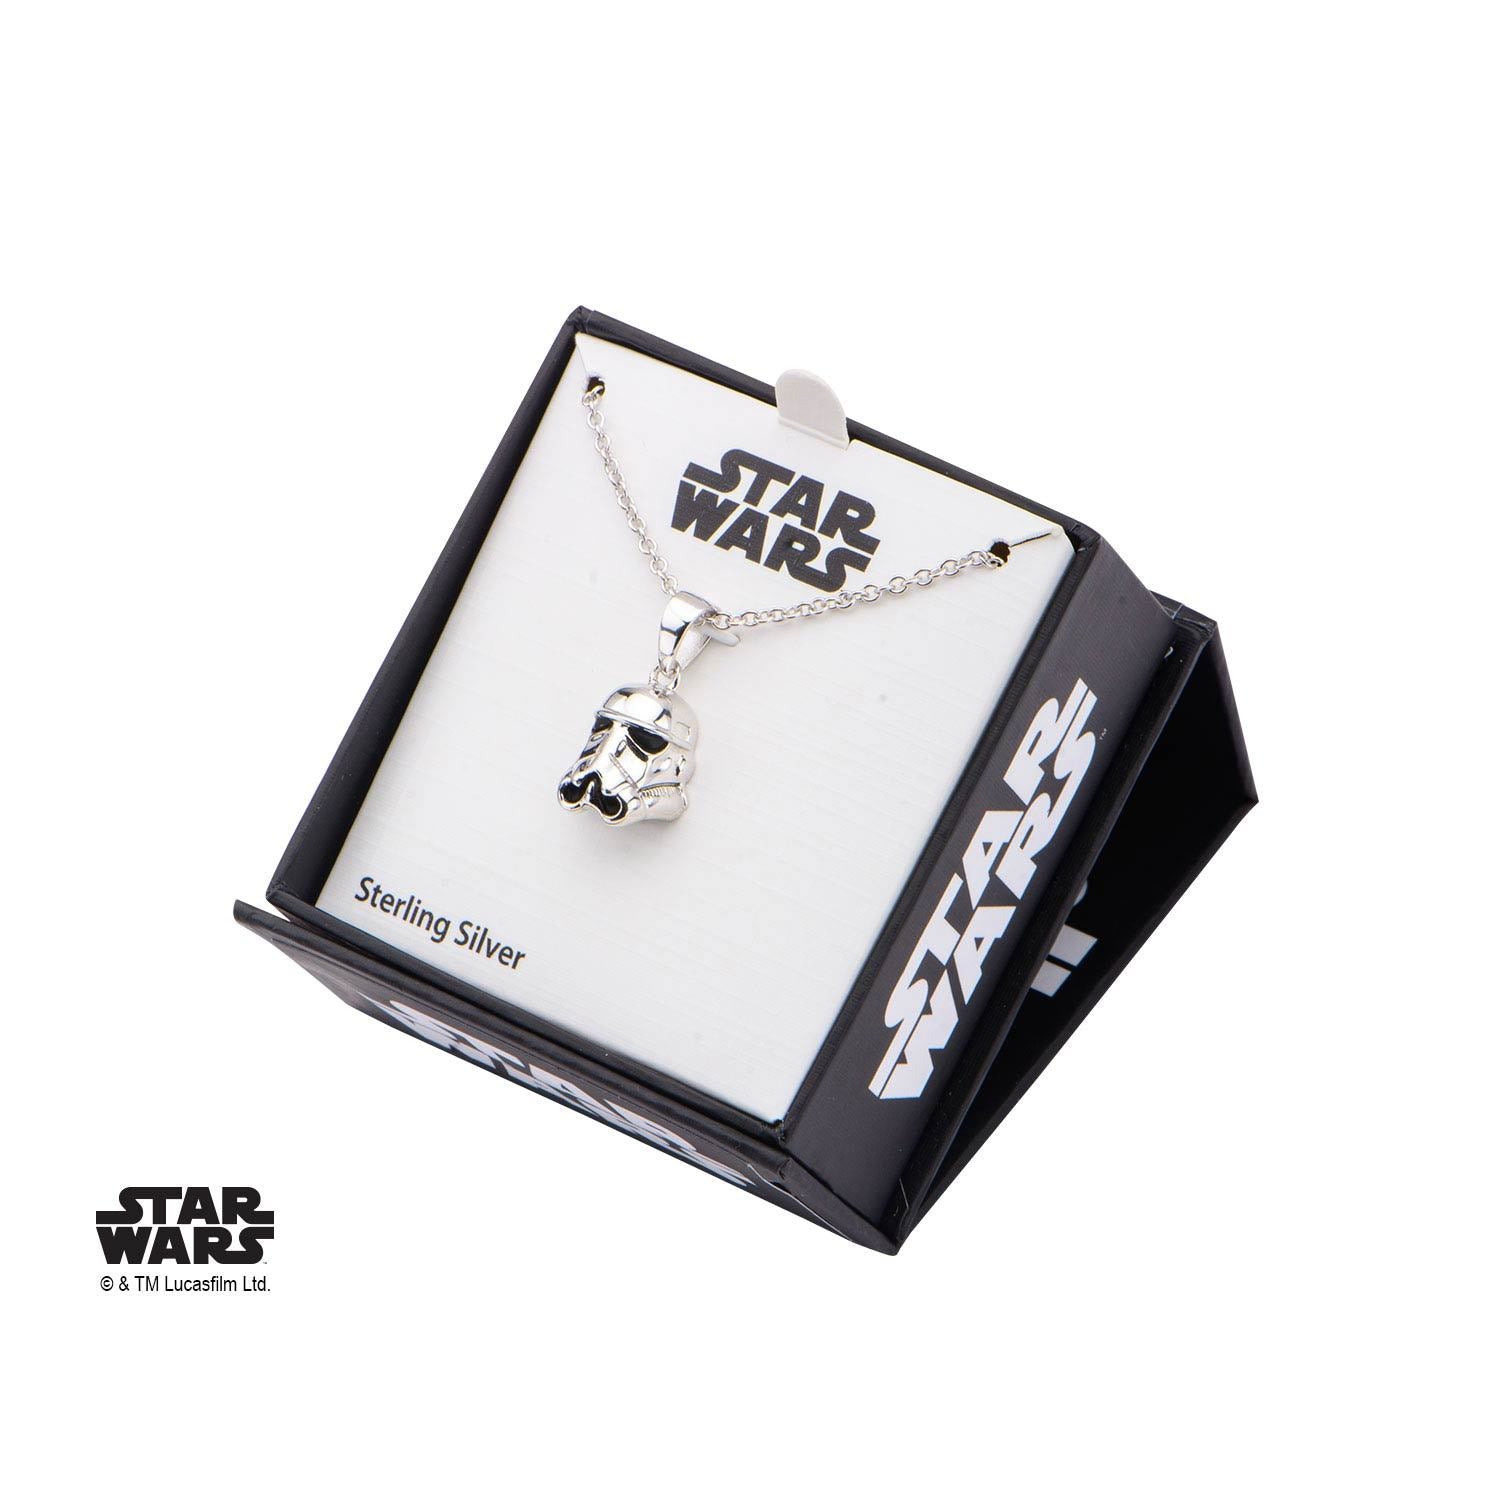 Star Wars 3D Stormtrooper Pendant Necklace, 925 Sterling Silver